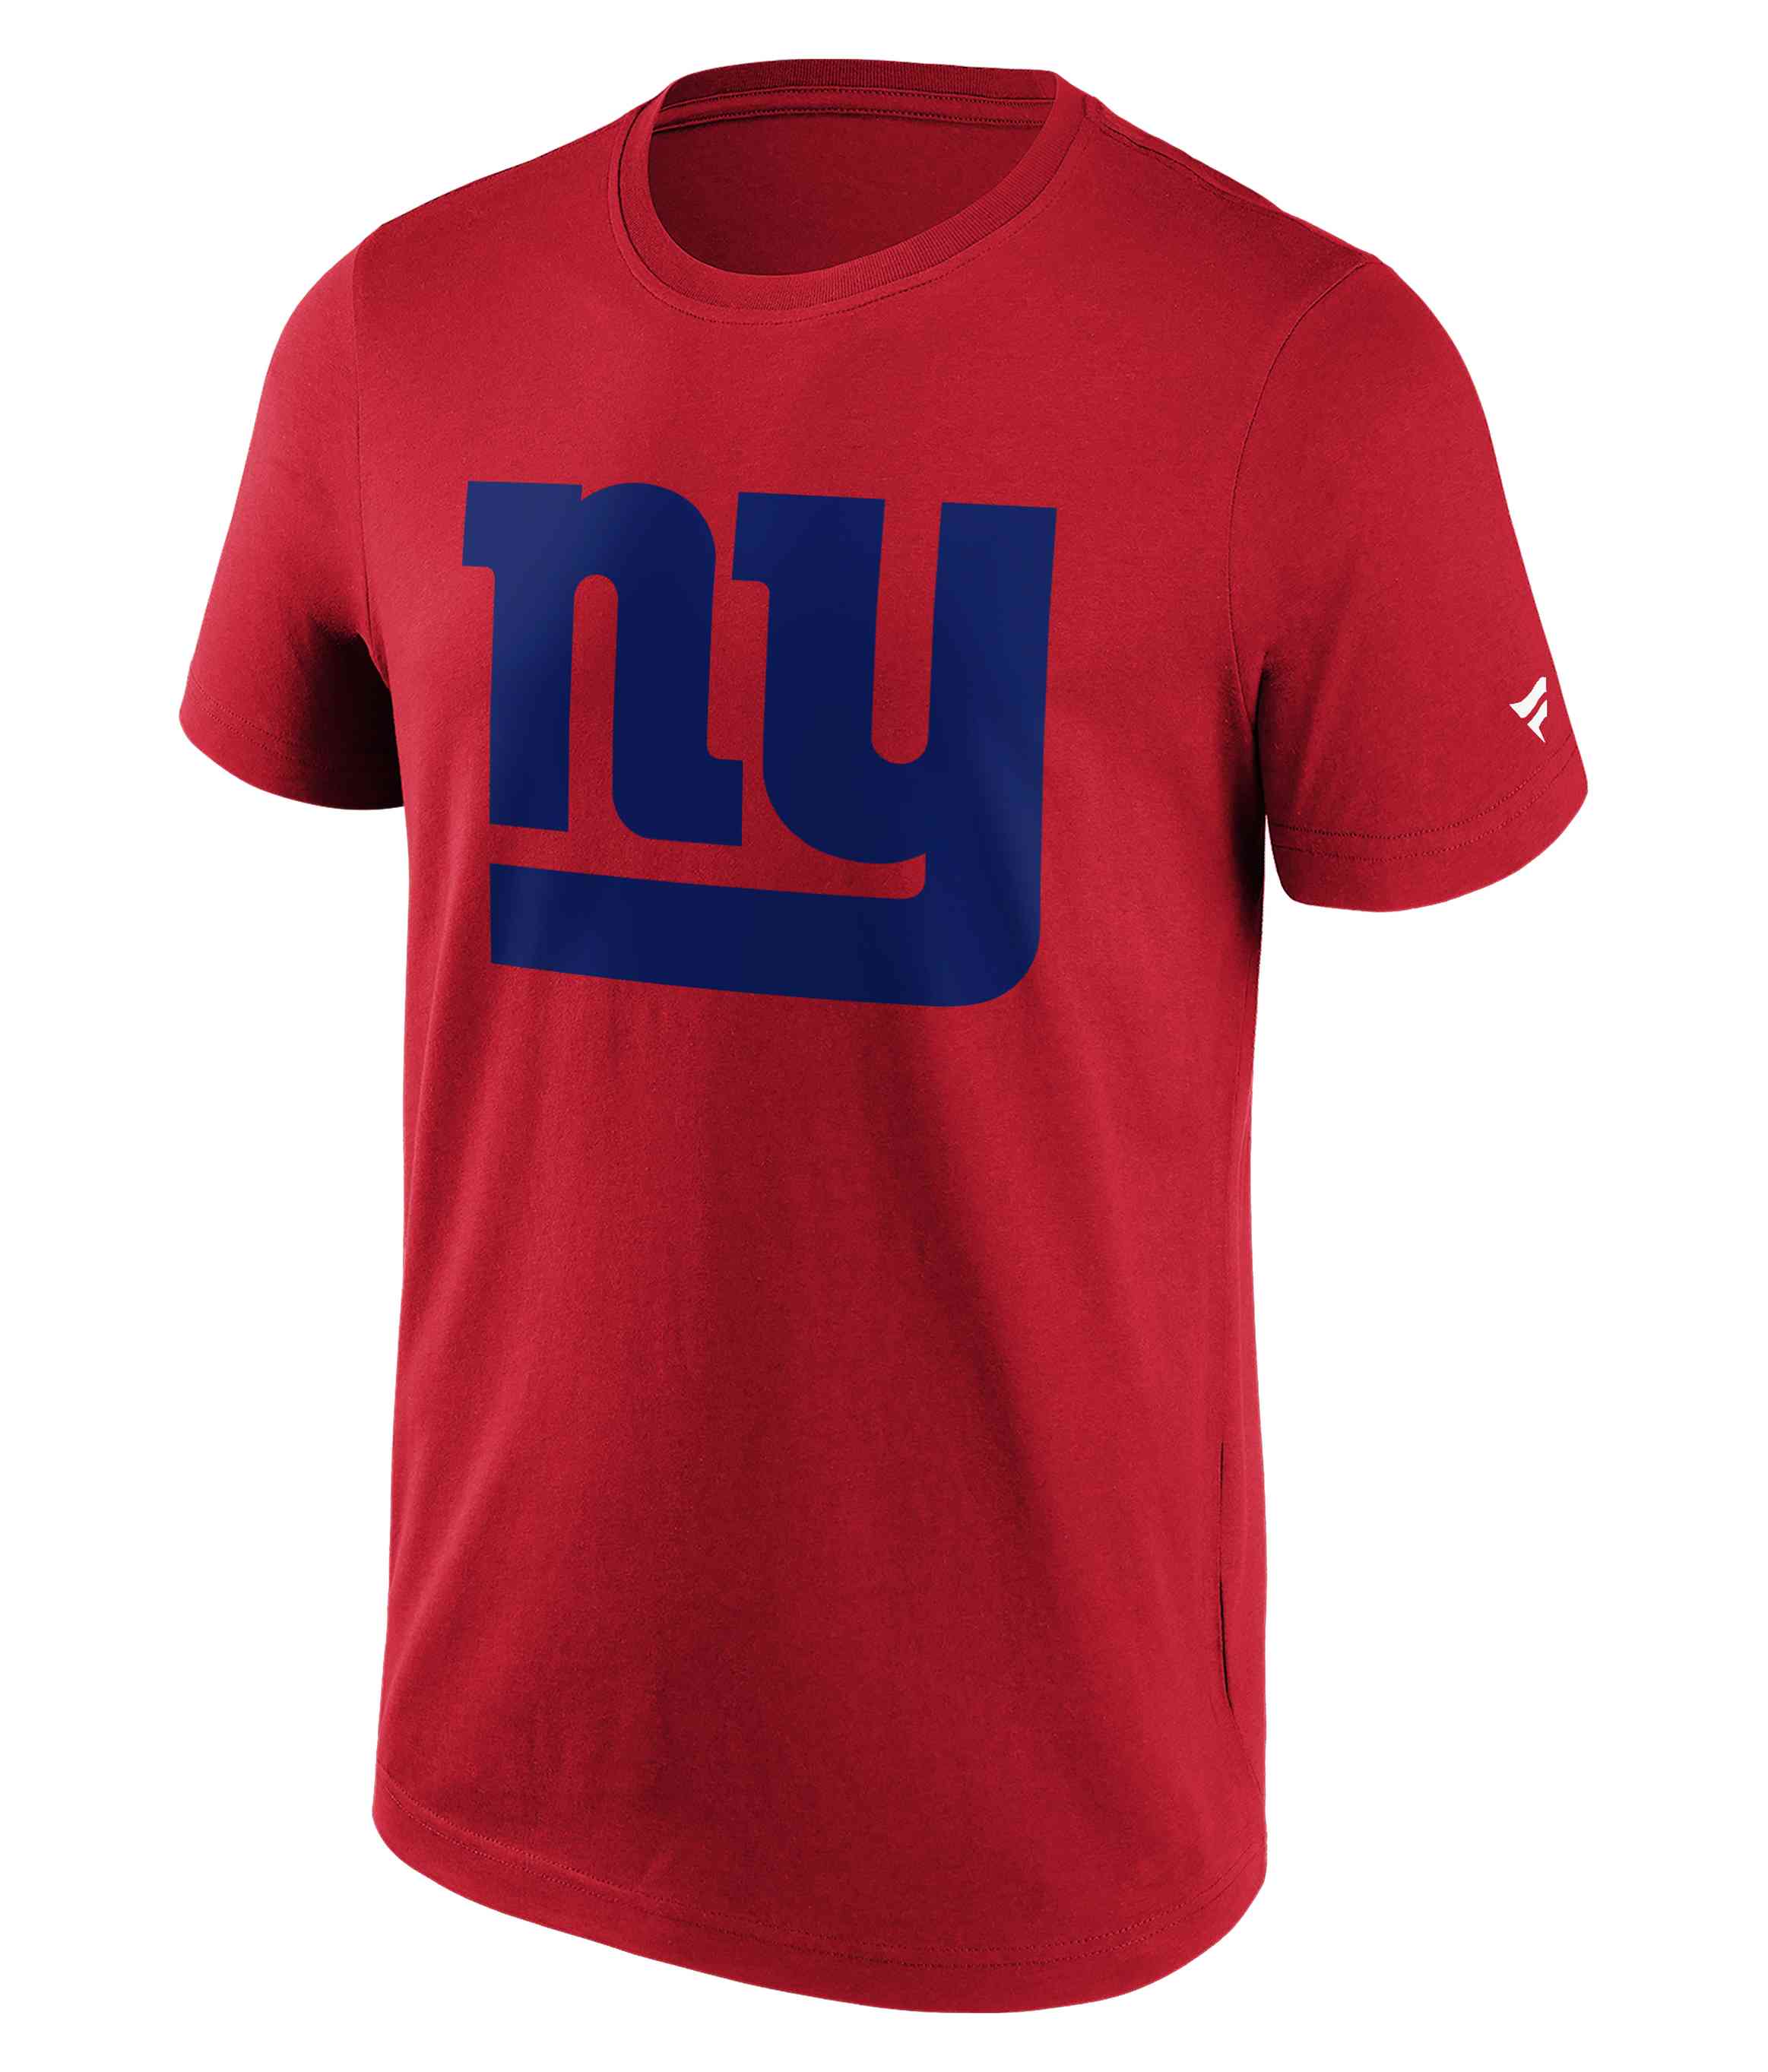 Fanatics - NFL New York Giants Primary Logo Graphic T-Shirt